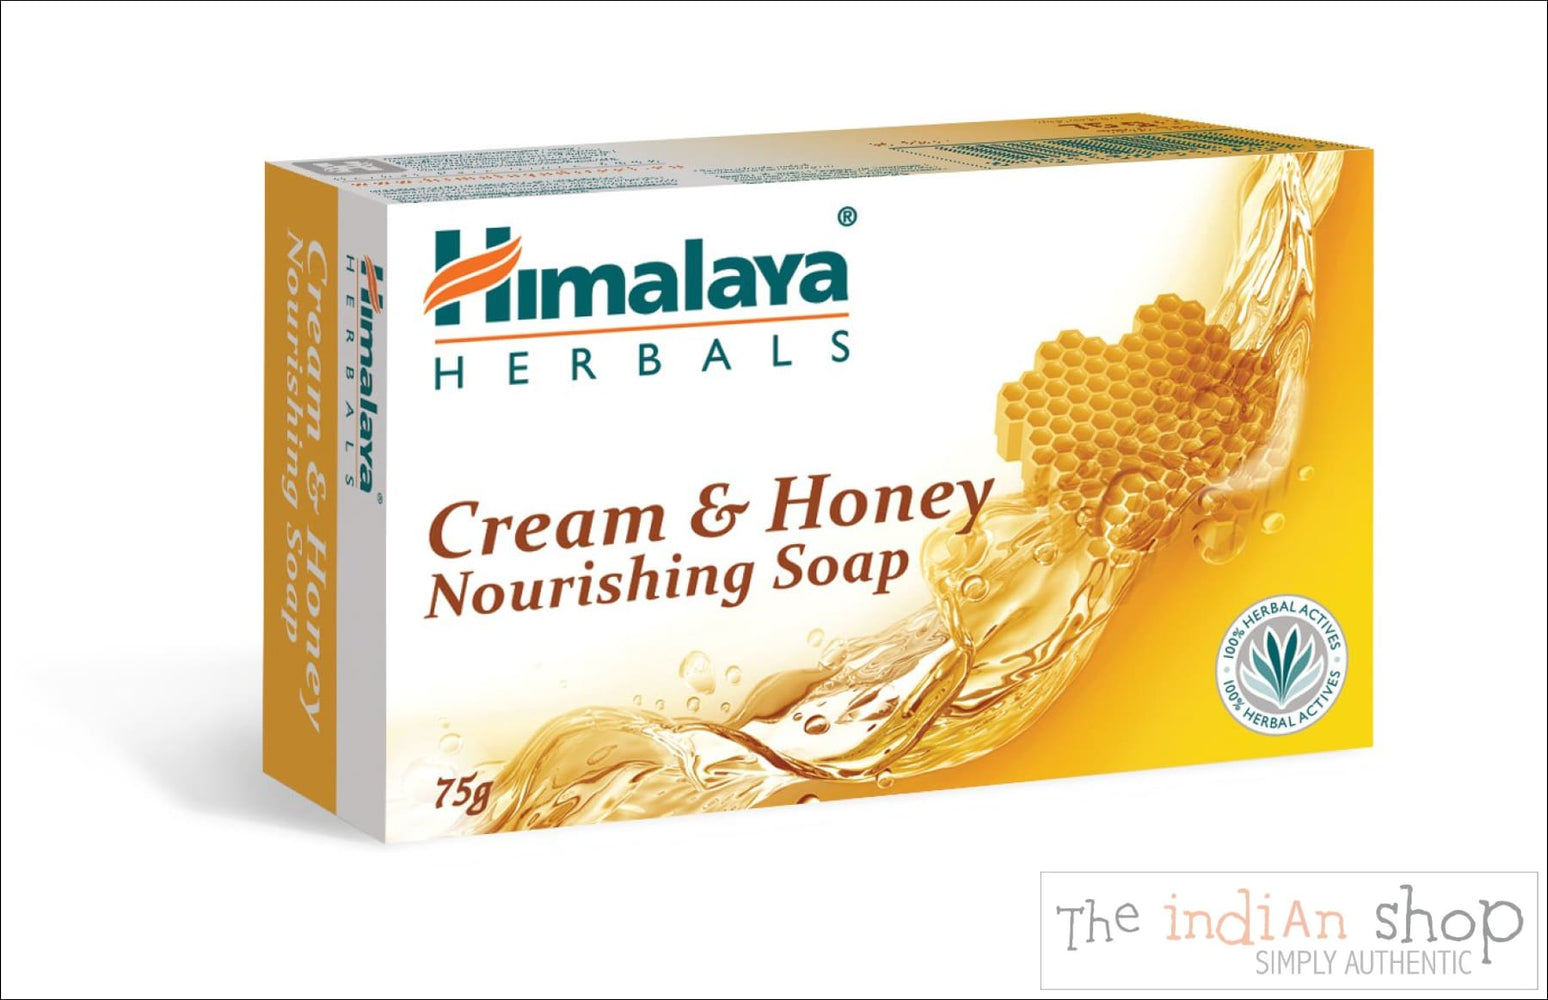 Himalaya Herbals Cream and Honey Soap - Beauty and Health